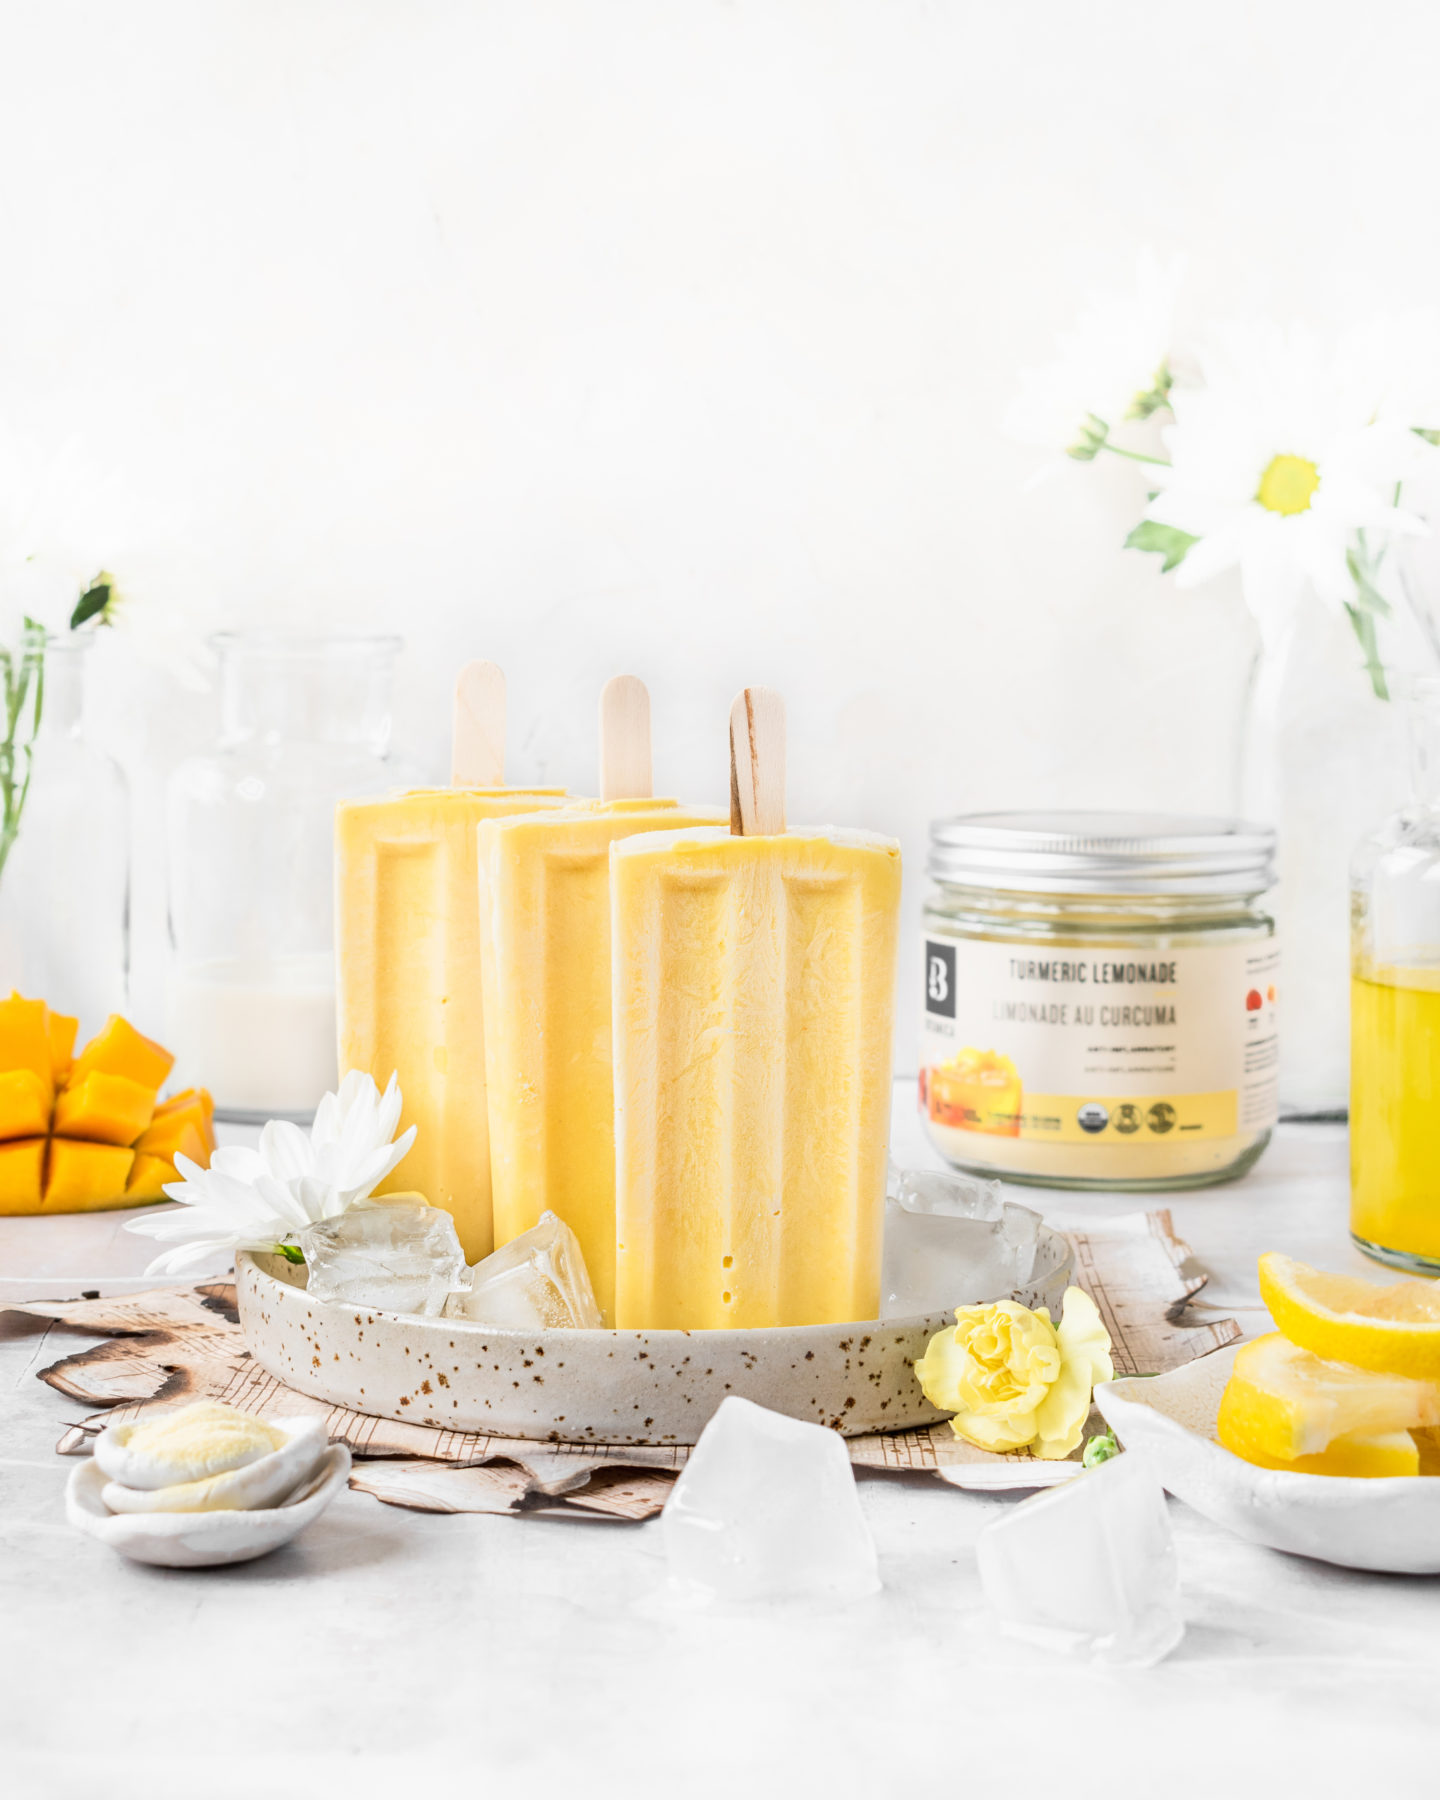 Creamy mango lemonade popsicles made with Botanica's Turmeric Lemonade powder. Refreshing, summer treat